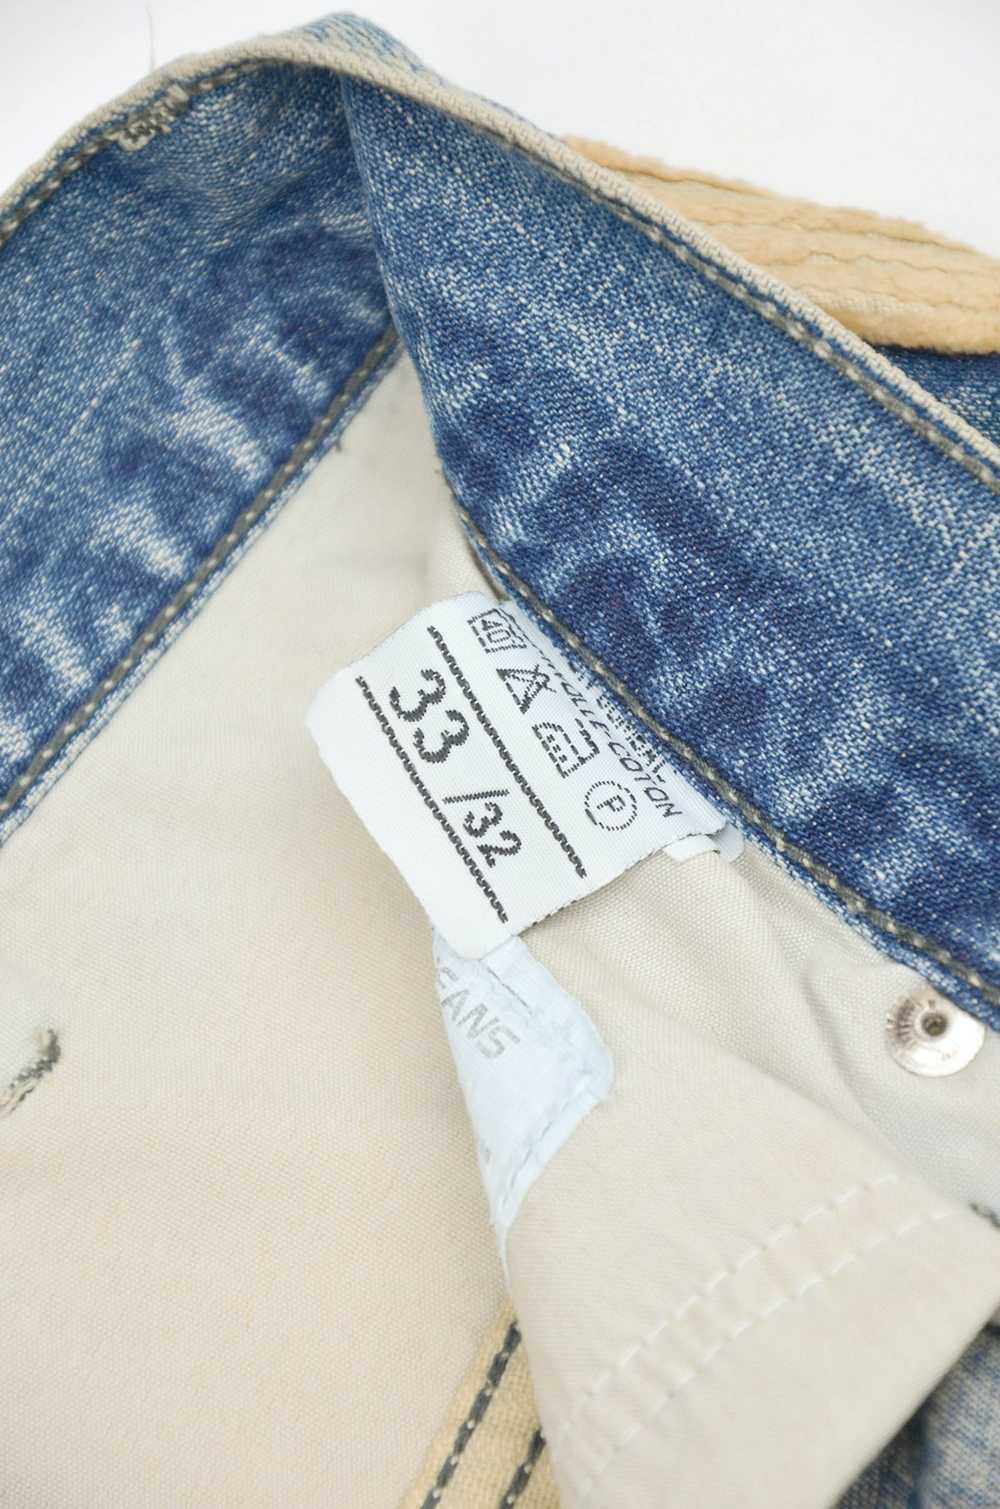 Jet Lag JET LAG Vintage Half Corduroy Jeans - image 8